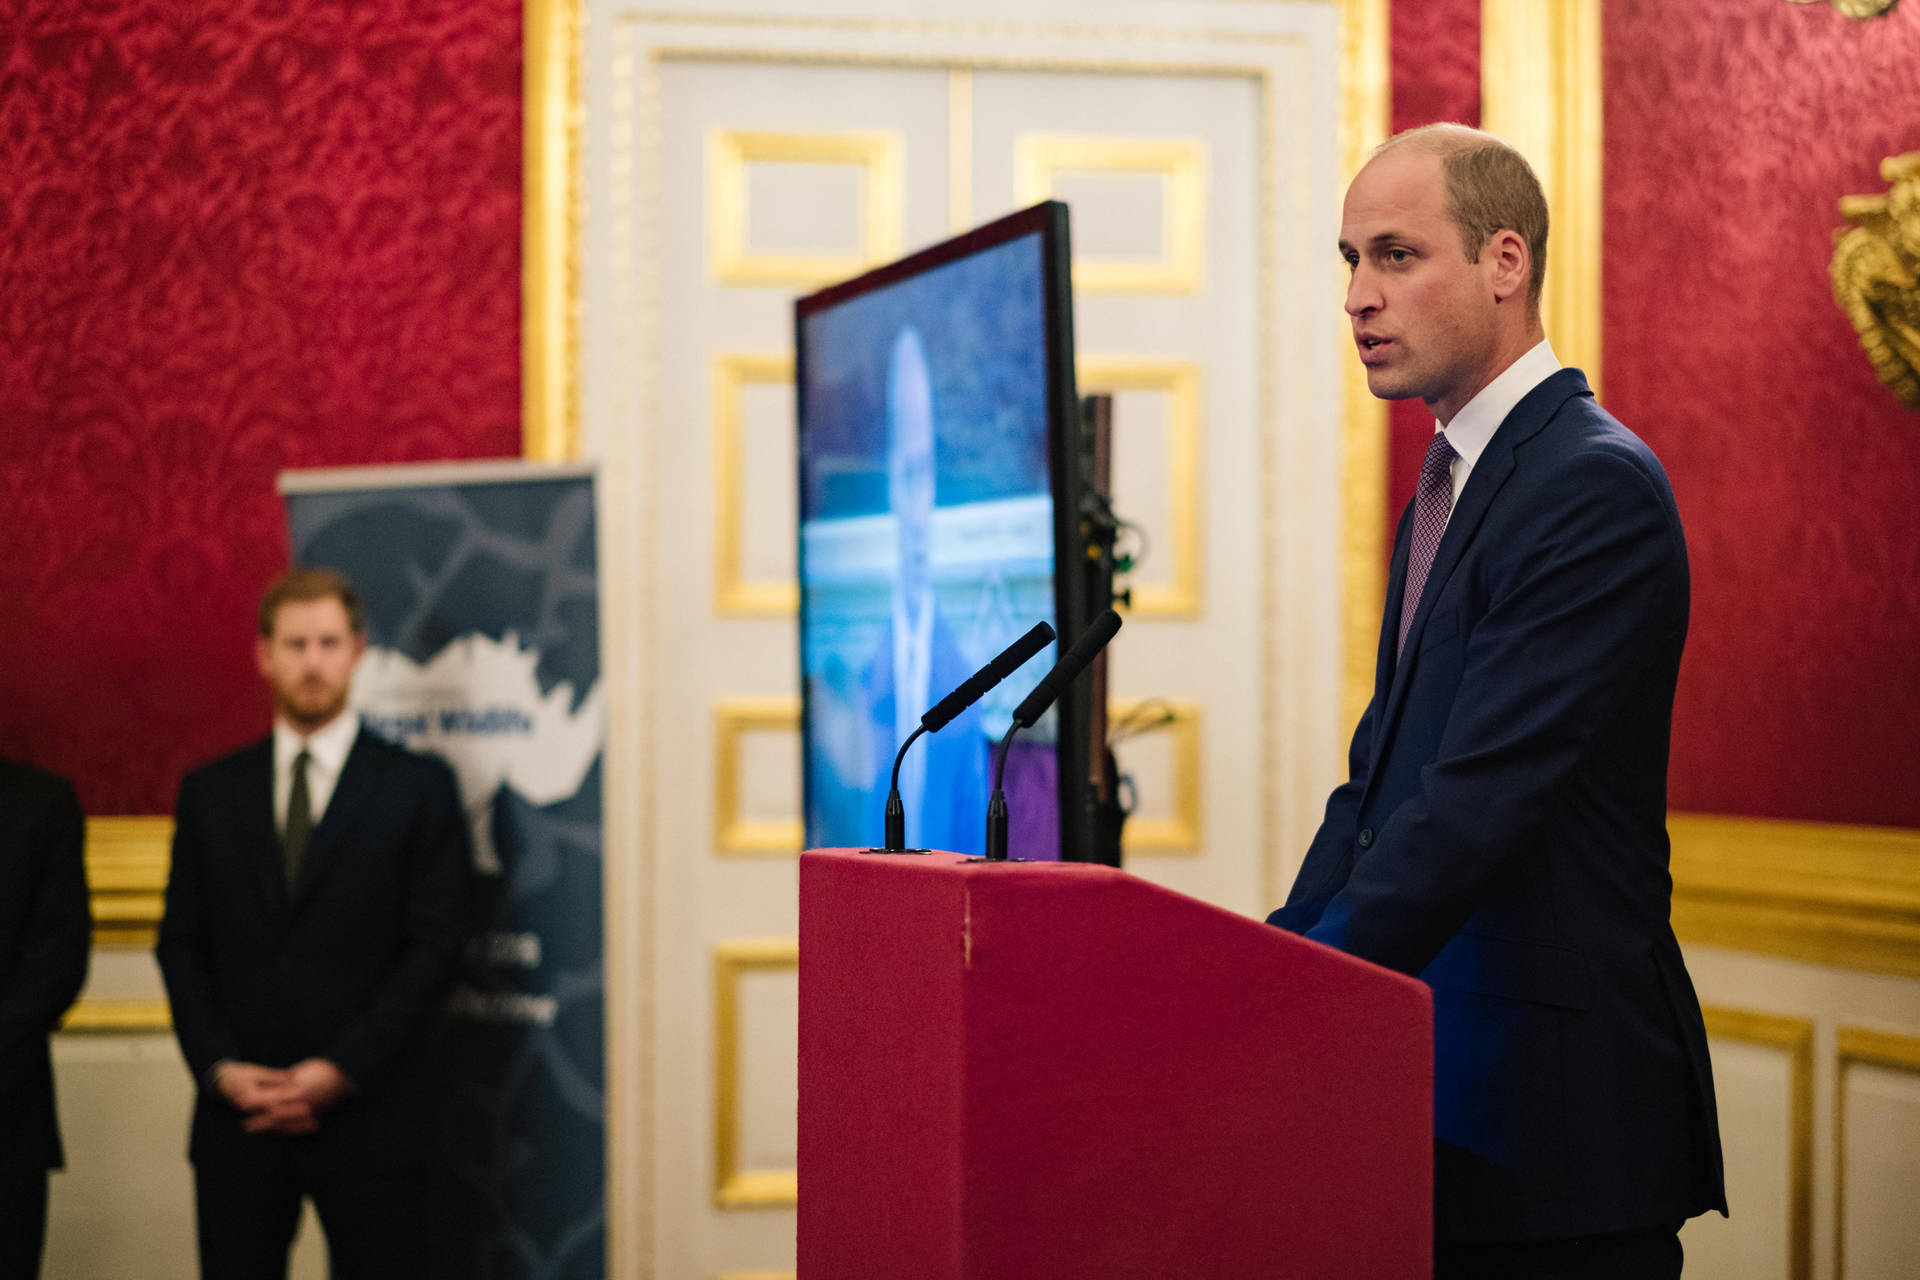 Prince William Speaking At The Podium Background